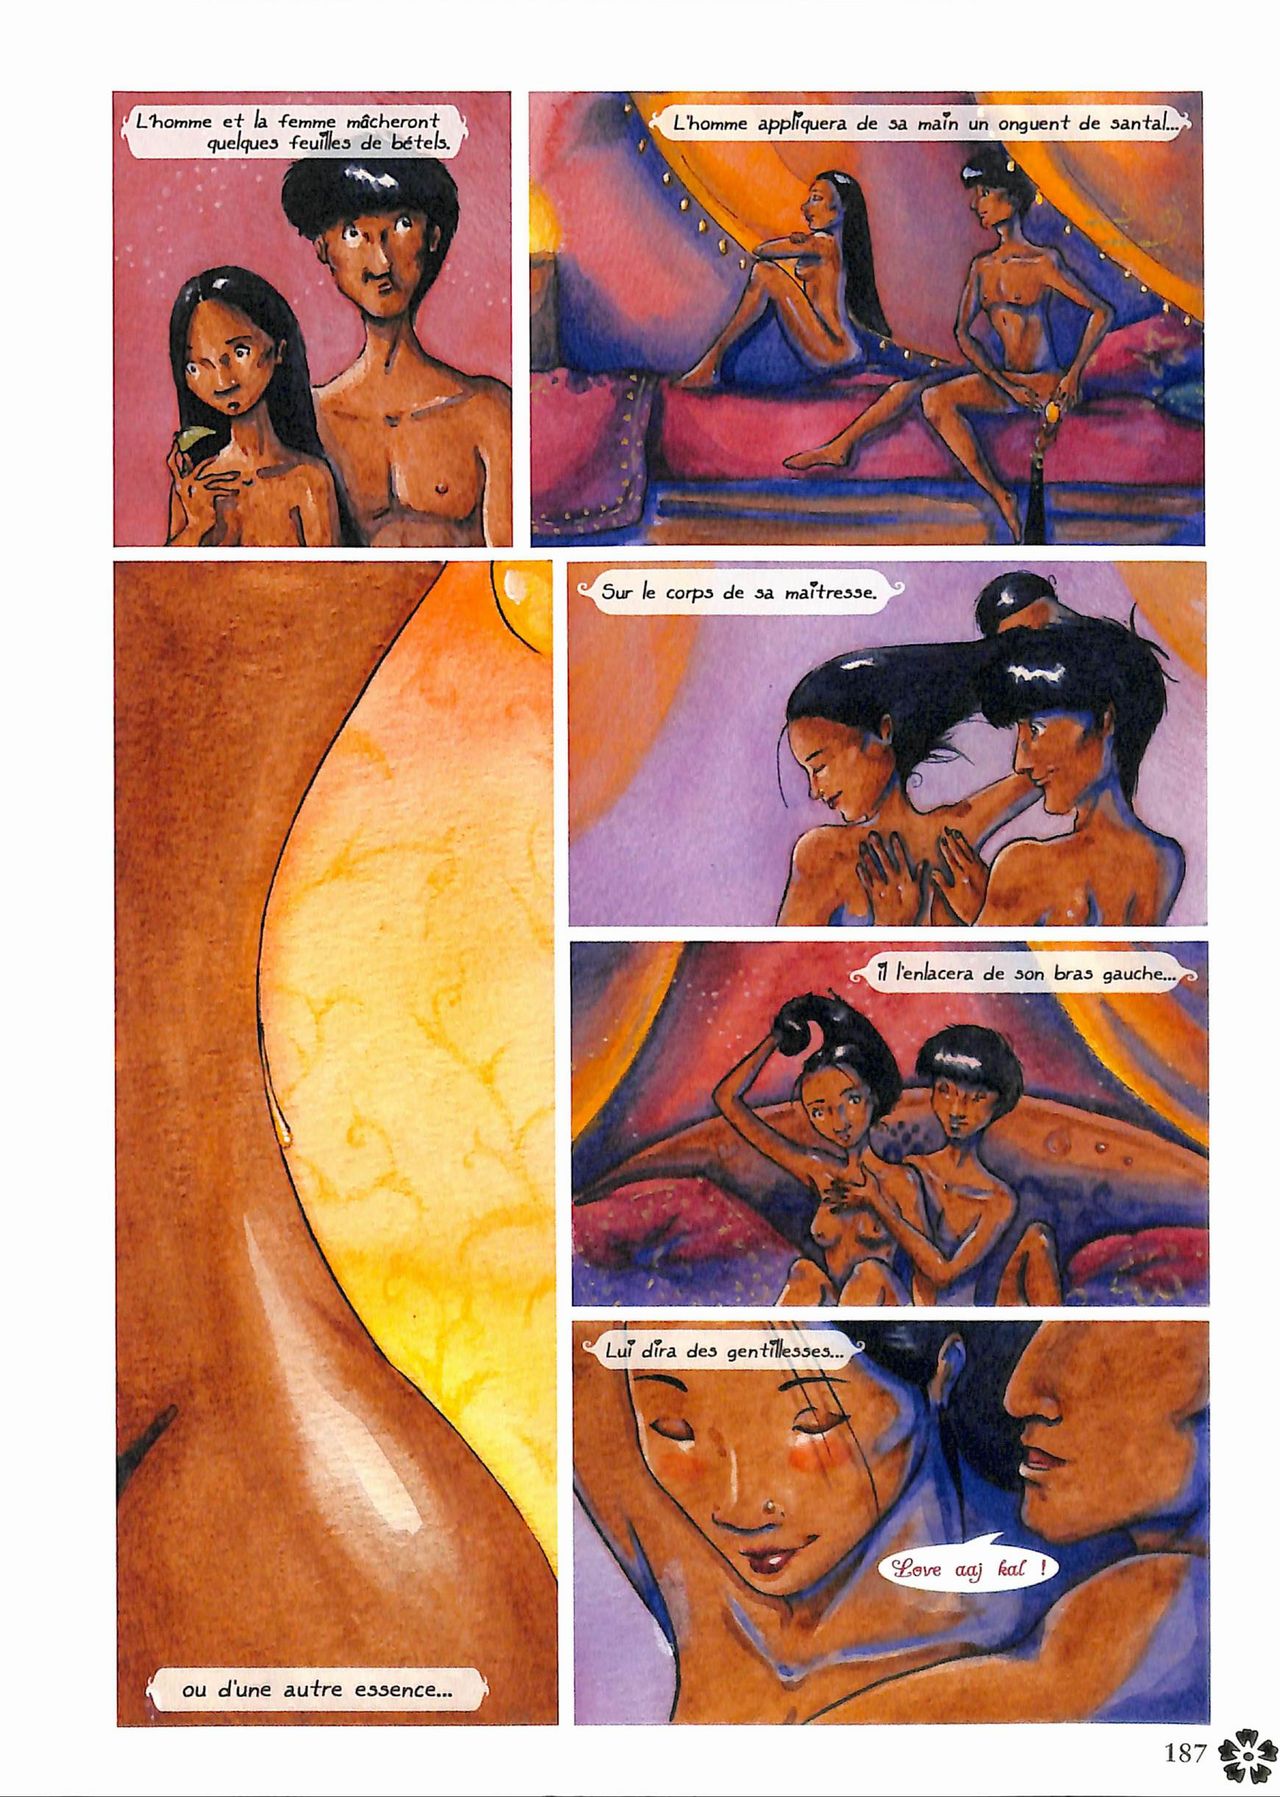 Kama Sutra en bandes dessinées - Kama Sutra with Comics numero d'image 187